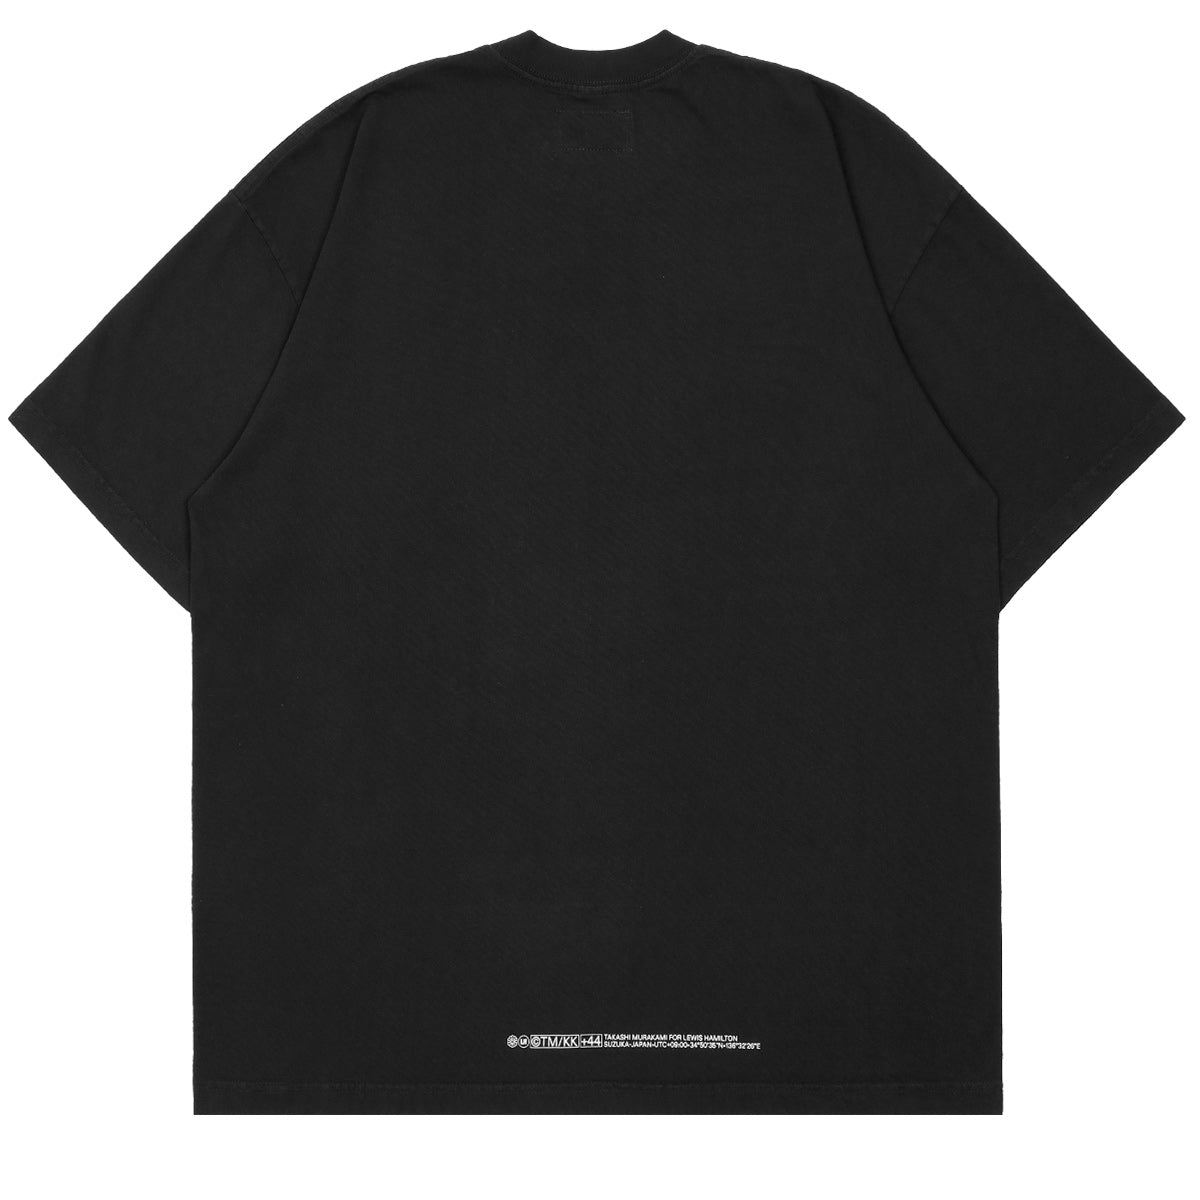 Lewis Hamilton×Takashi Murakami Race Zone Tee BLACK T-shirt